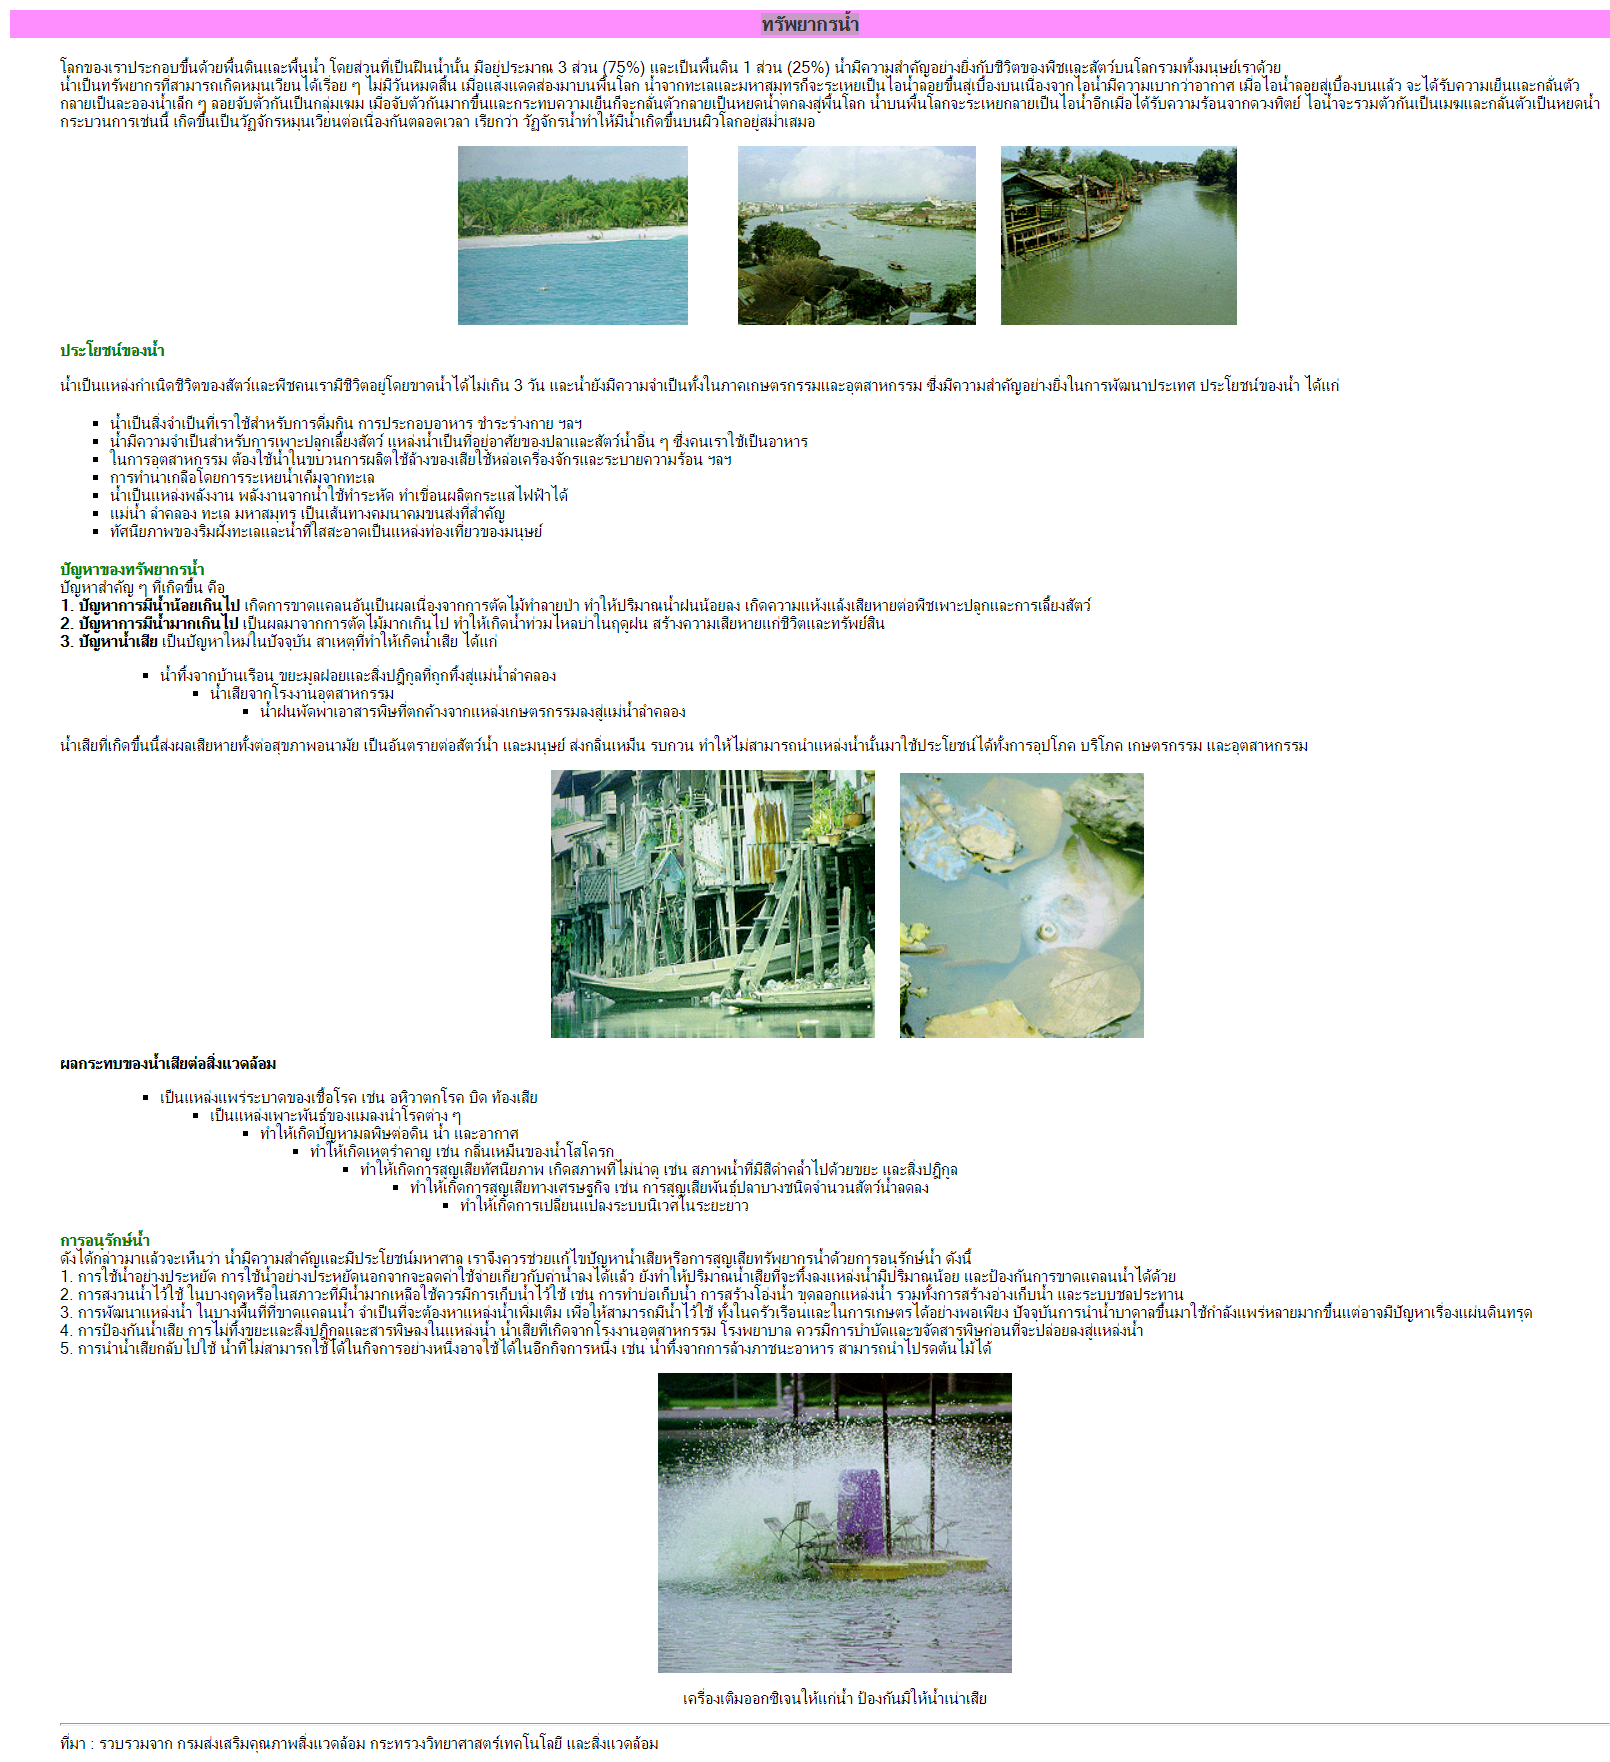 screencapture-web-ku-ac-th-schoolnet-snet6-envi2-subwater-subwater-htm-2018-07-04-18_54_25.png - 1.20 MB